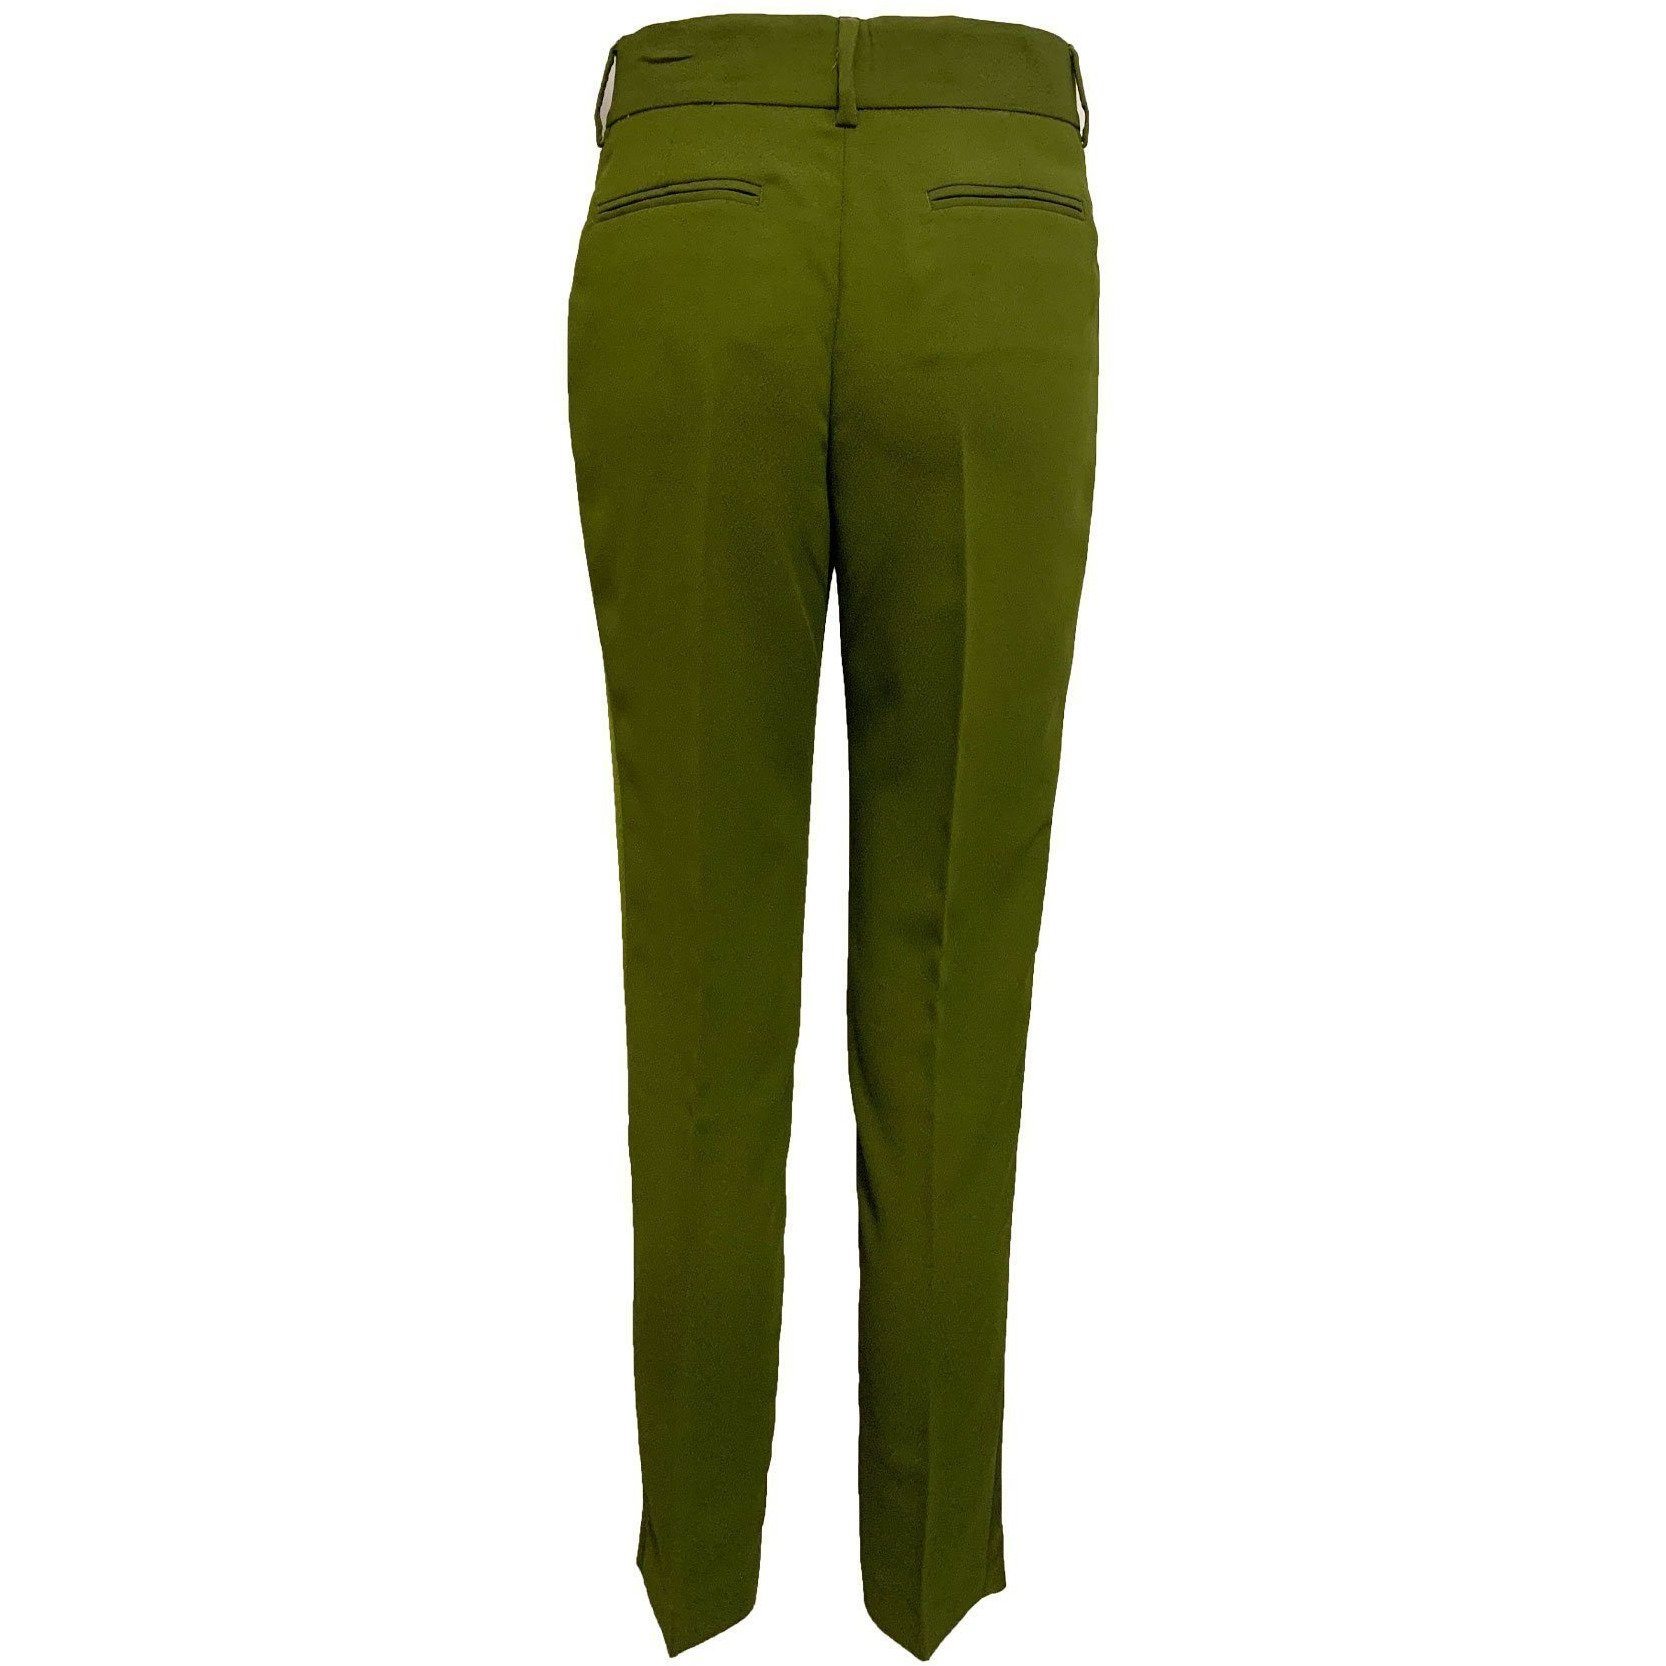 Tuxedo Pant Military Green - shop-olivia.com